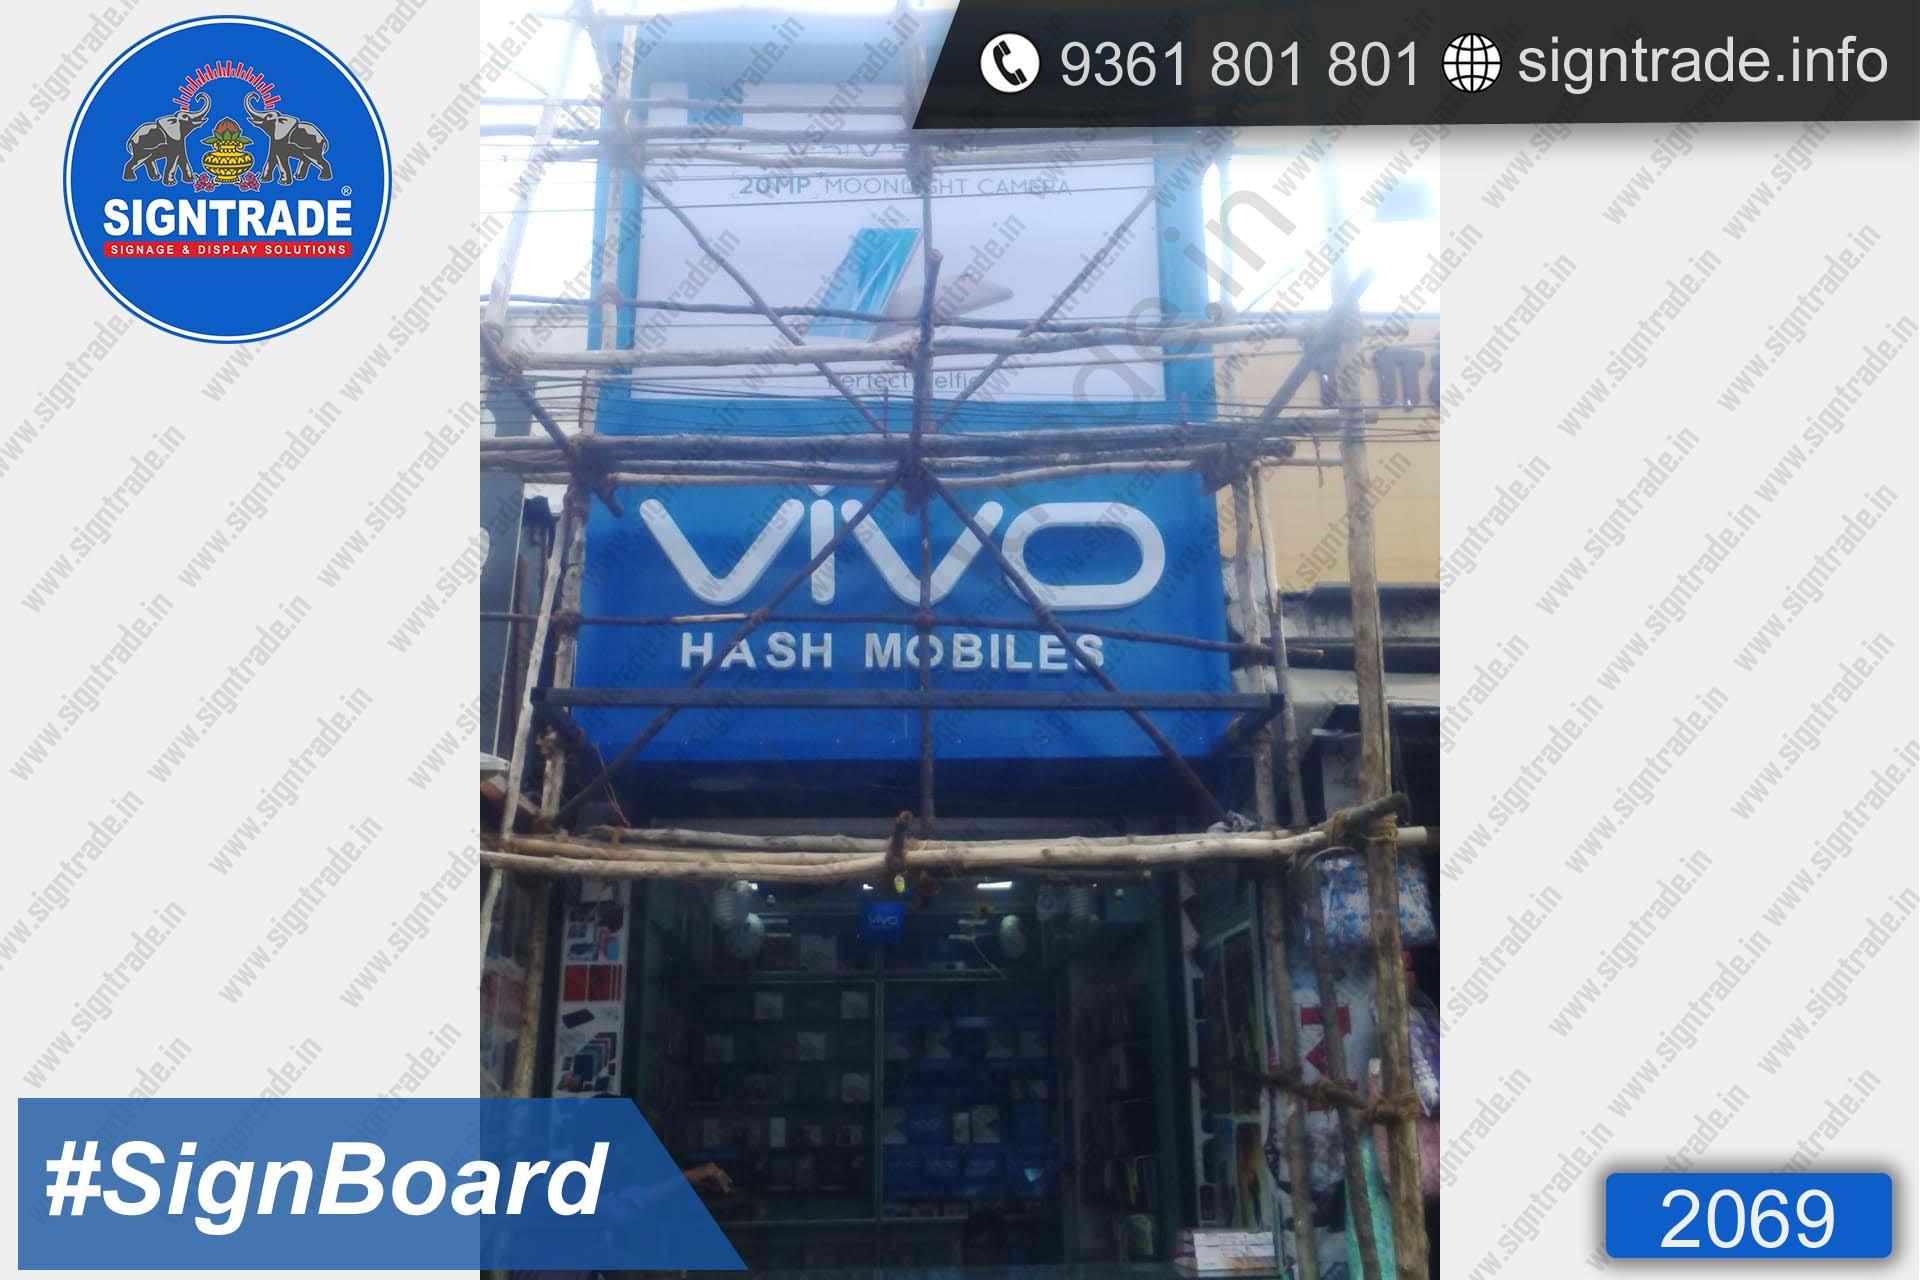 vivo hash mobiles sign board